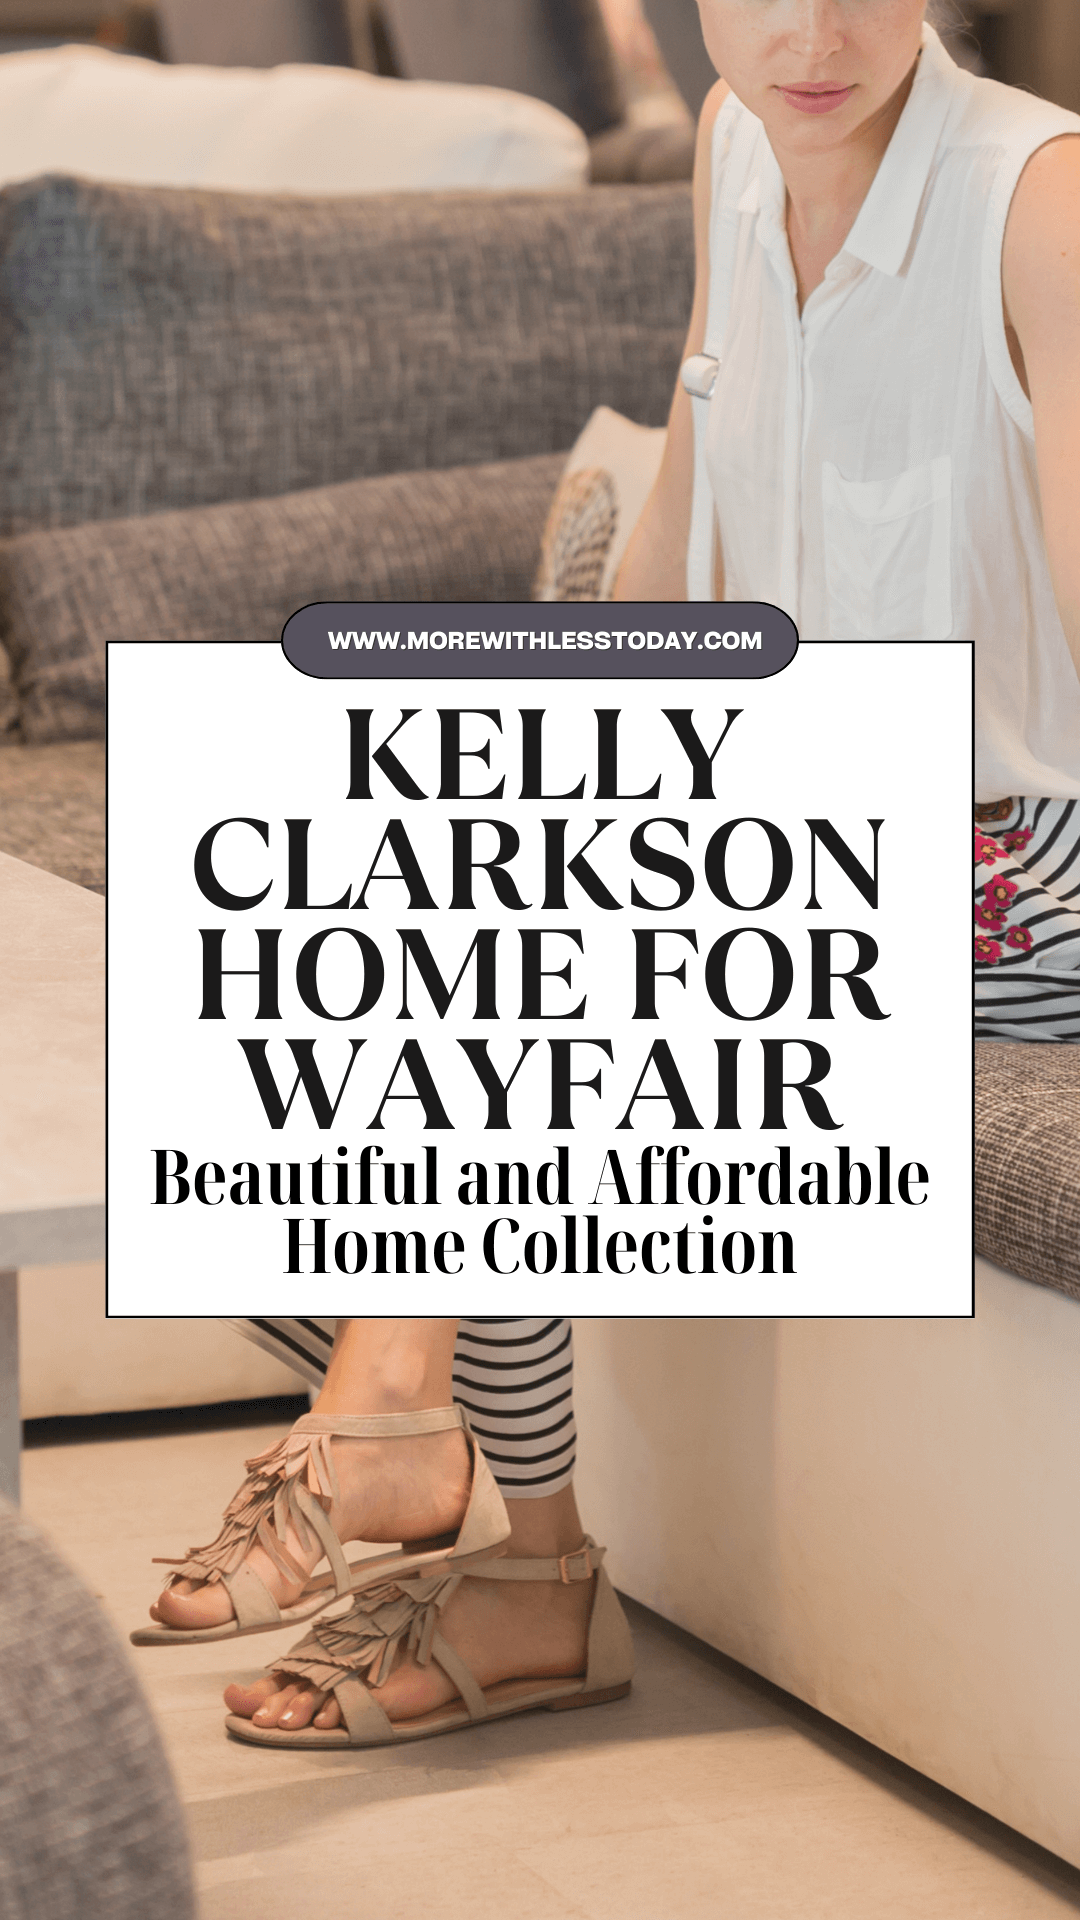 Kelly Clarkson Home for Wayfair - PIN